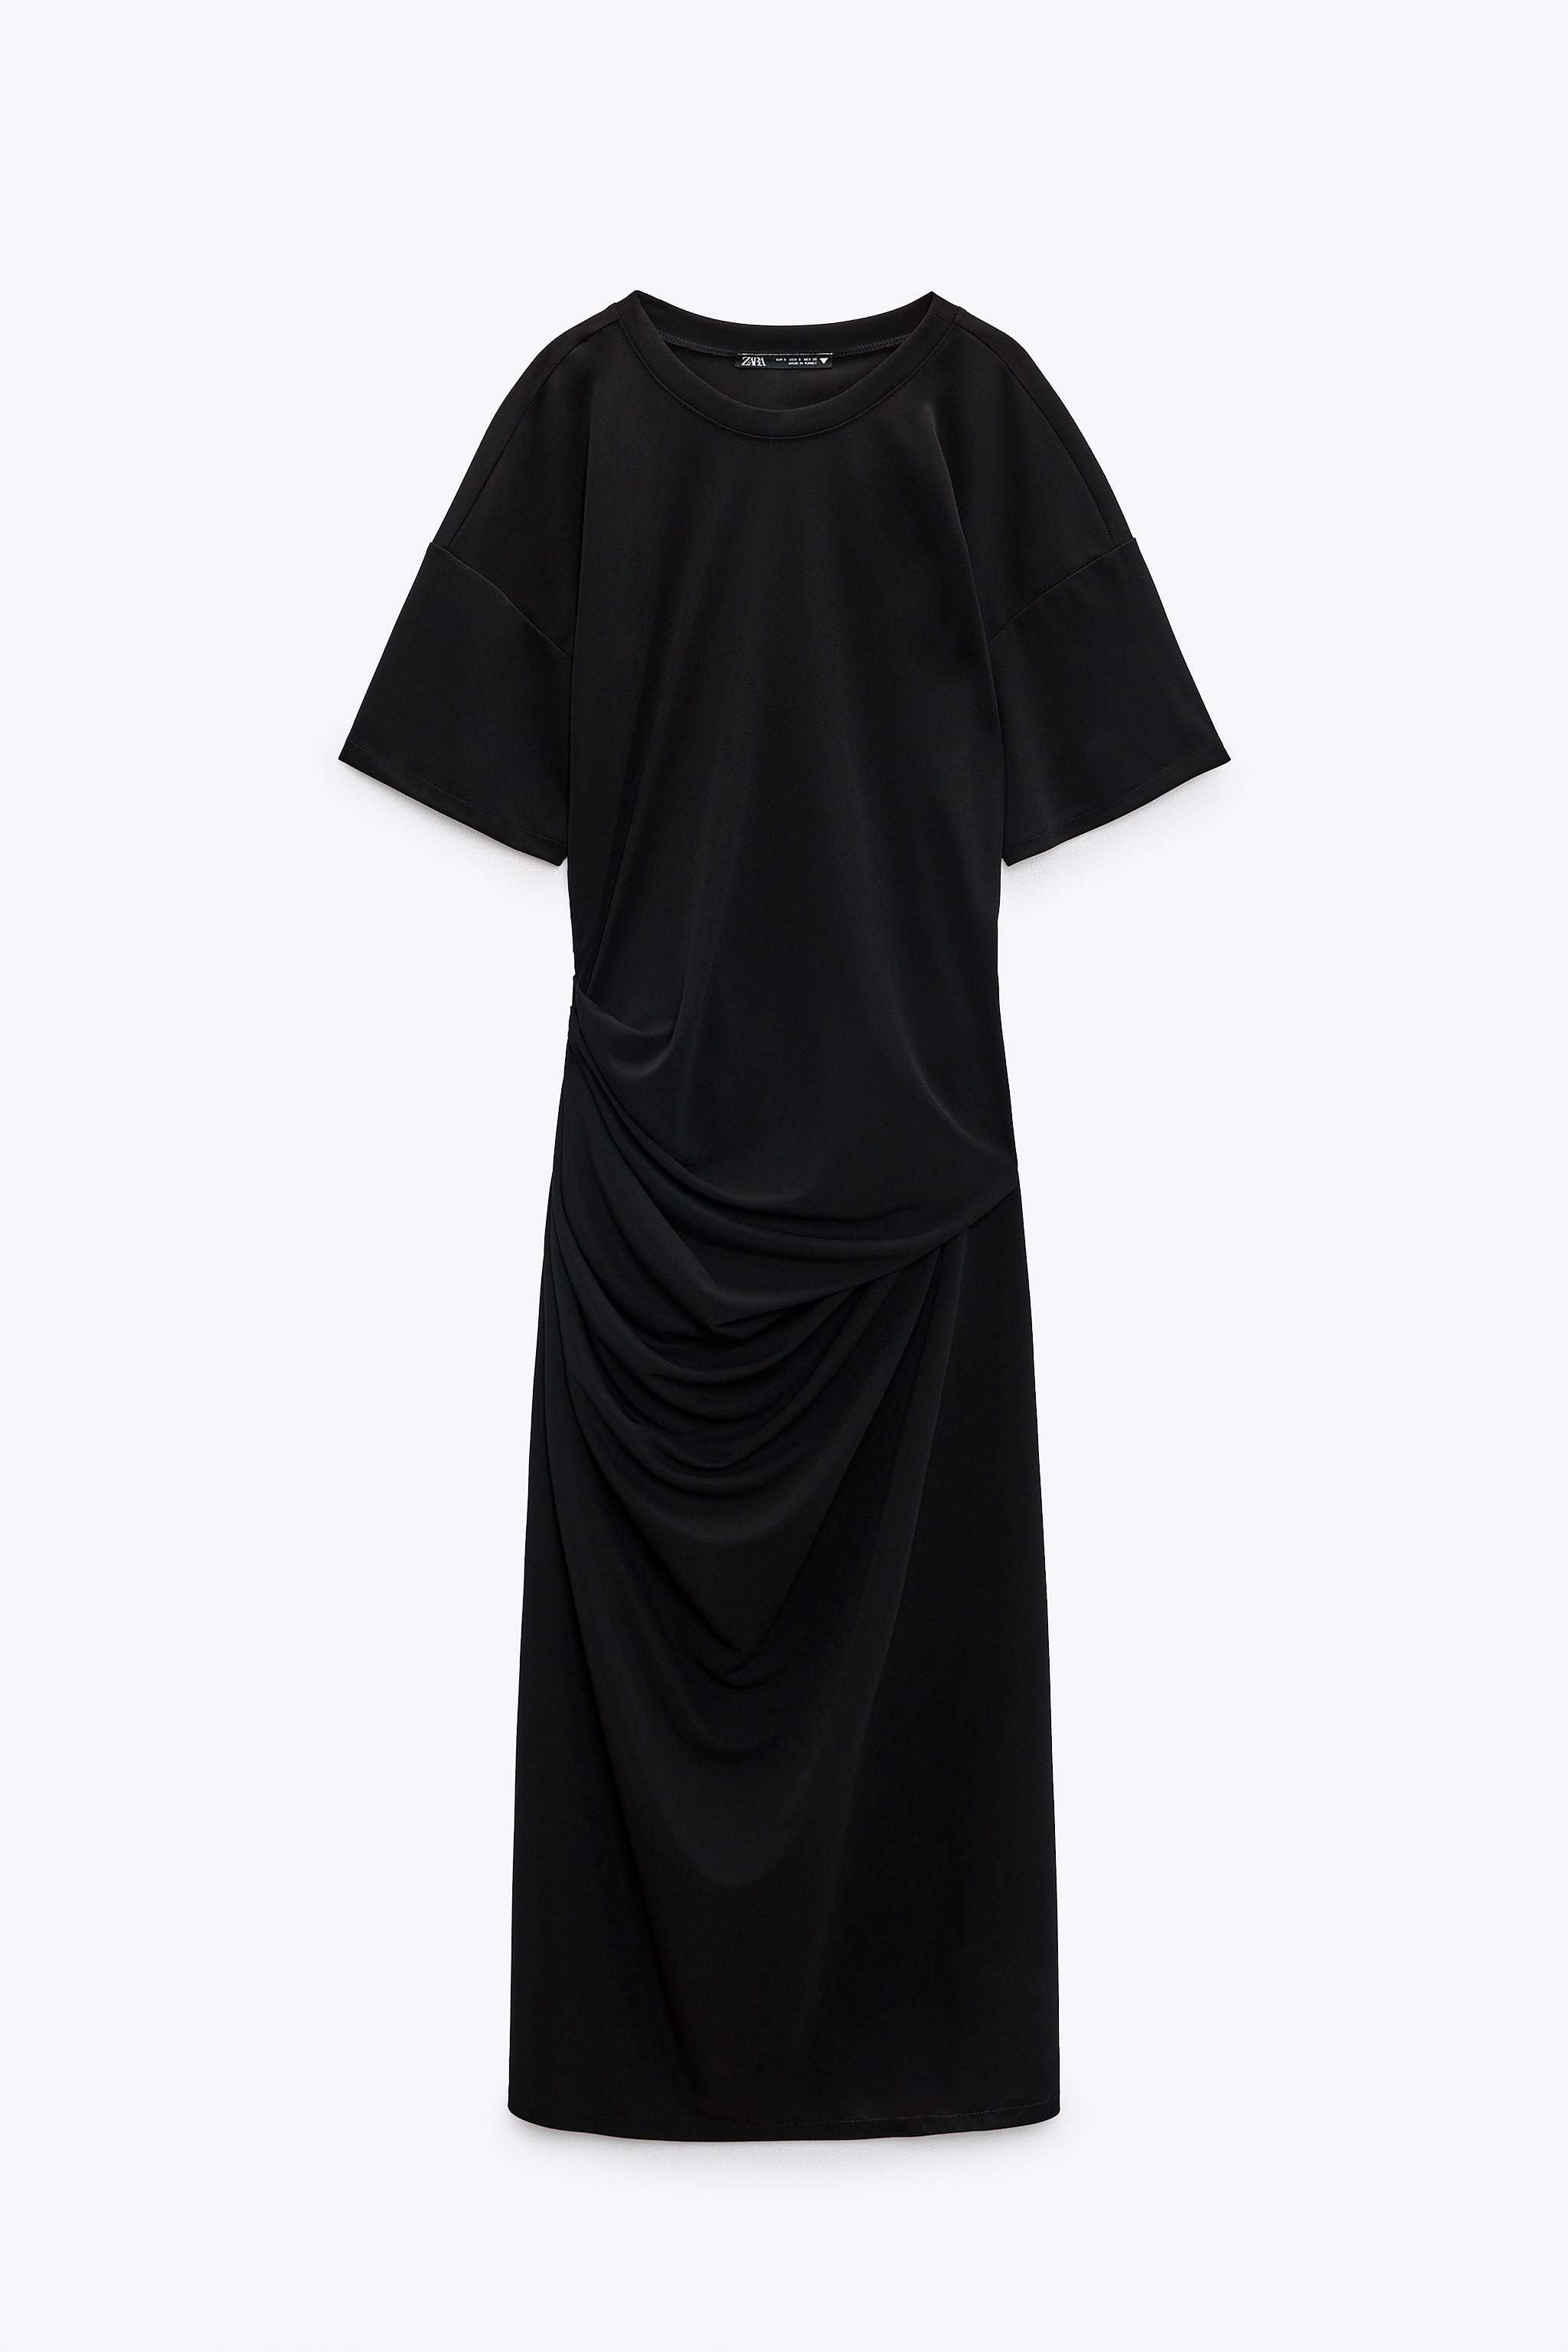 Vestido negro drapeado de Zara (15,99 euros).